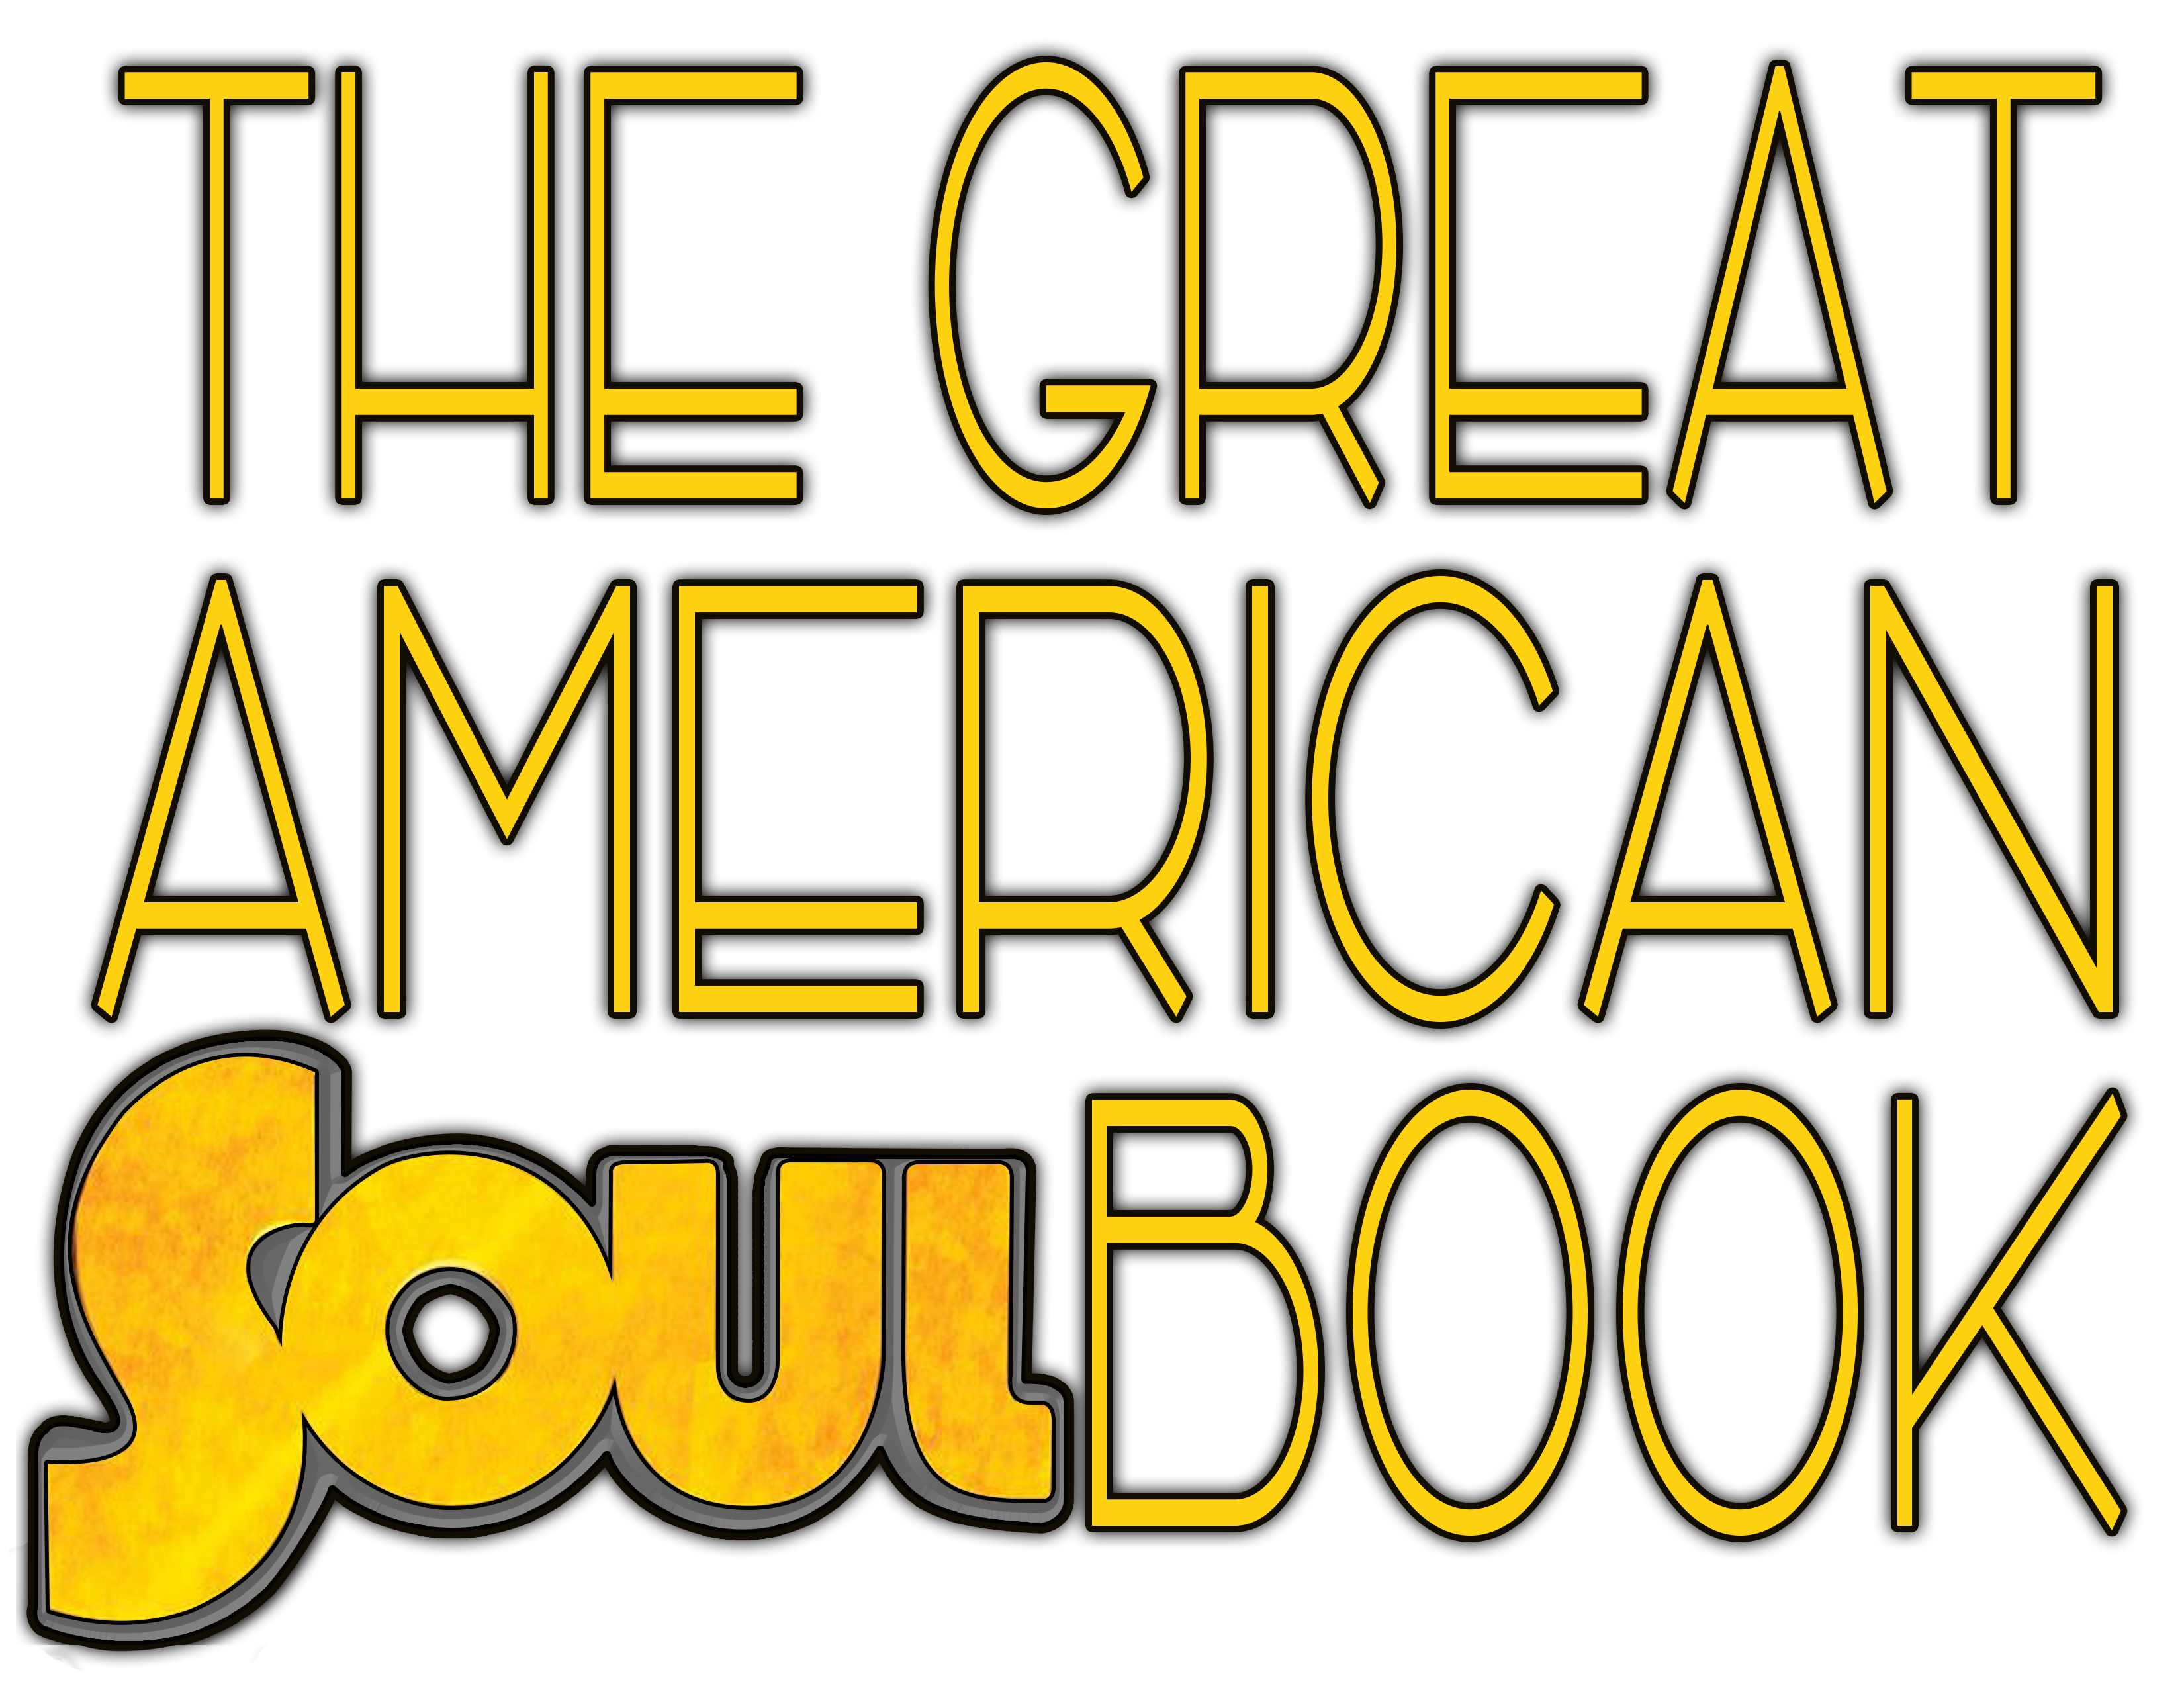 TheGreatAmericanSoulBook-Logo-PNG